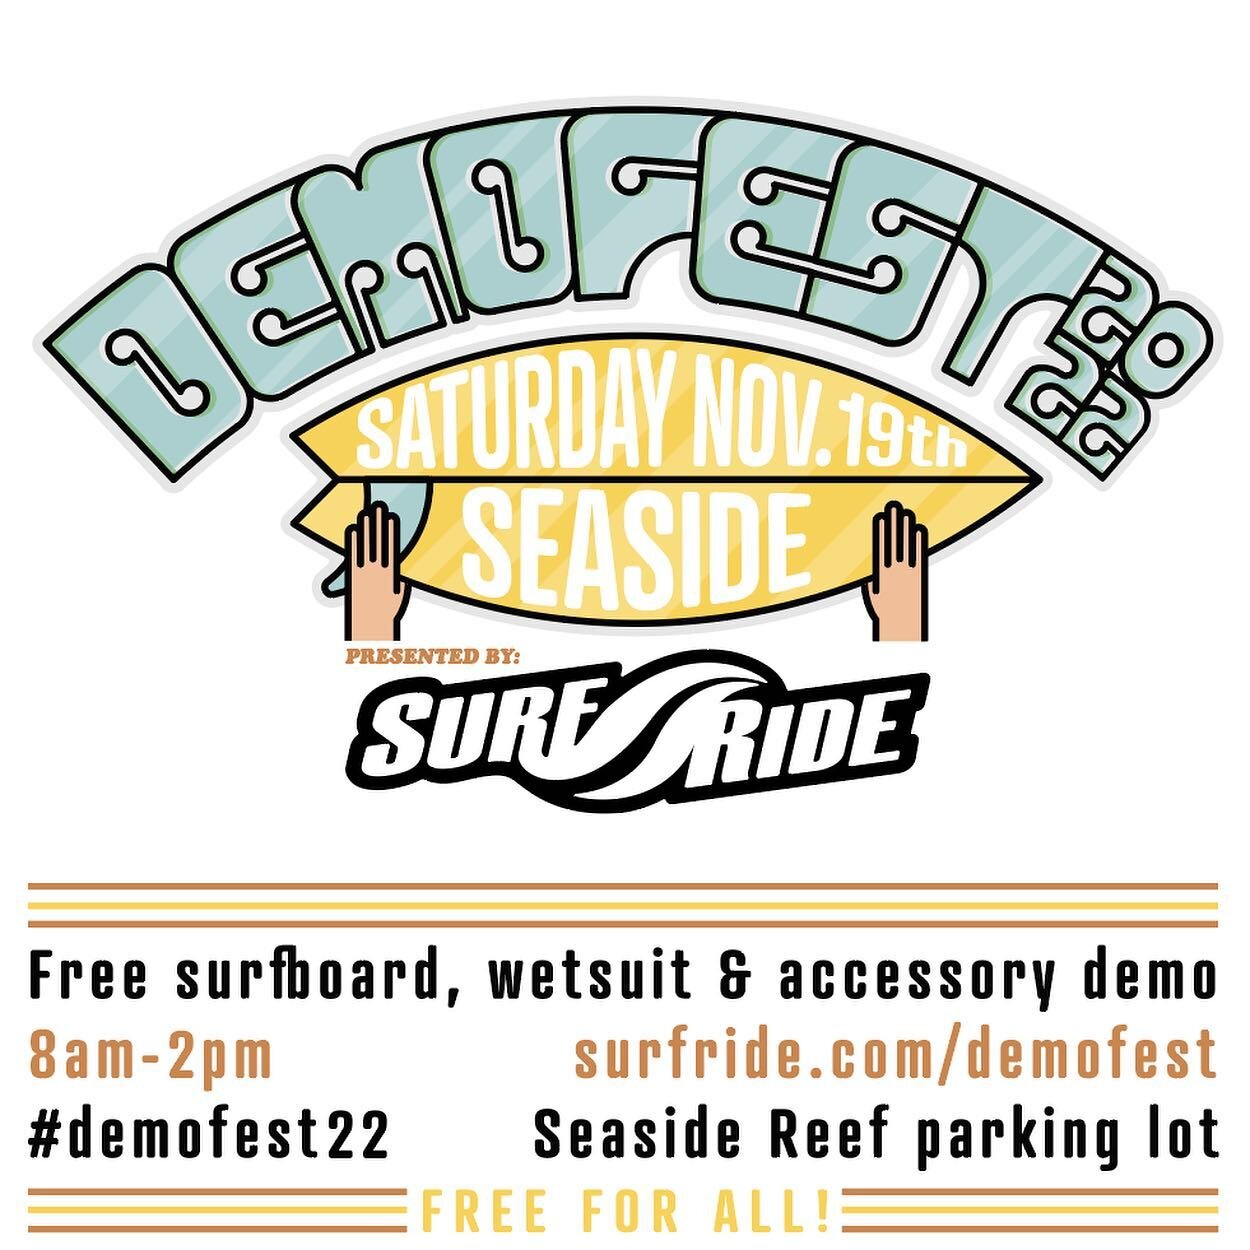 DemoFest 22 is Tomorrow!!! Cruise down to Seaside Reef Sat. Nov. 19th 2022!!!
All the best brands at the best demo!! 

@surftechsurf @pandasurfboards @futuresfins @fcs_surf @ripcurl_usa @haydenshapes @cisurfboards @rustysurfboards @firewiresurfboards